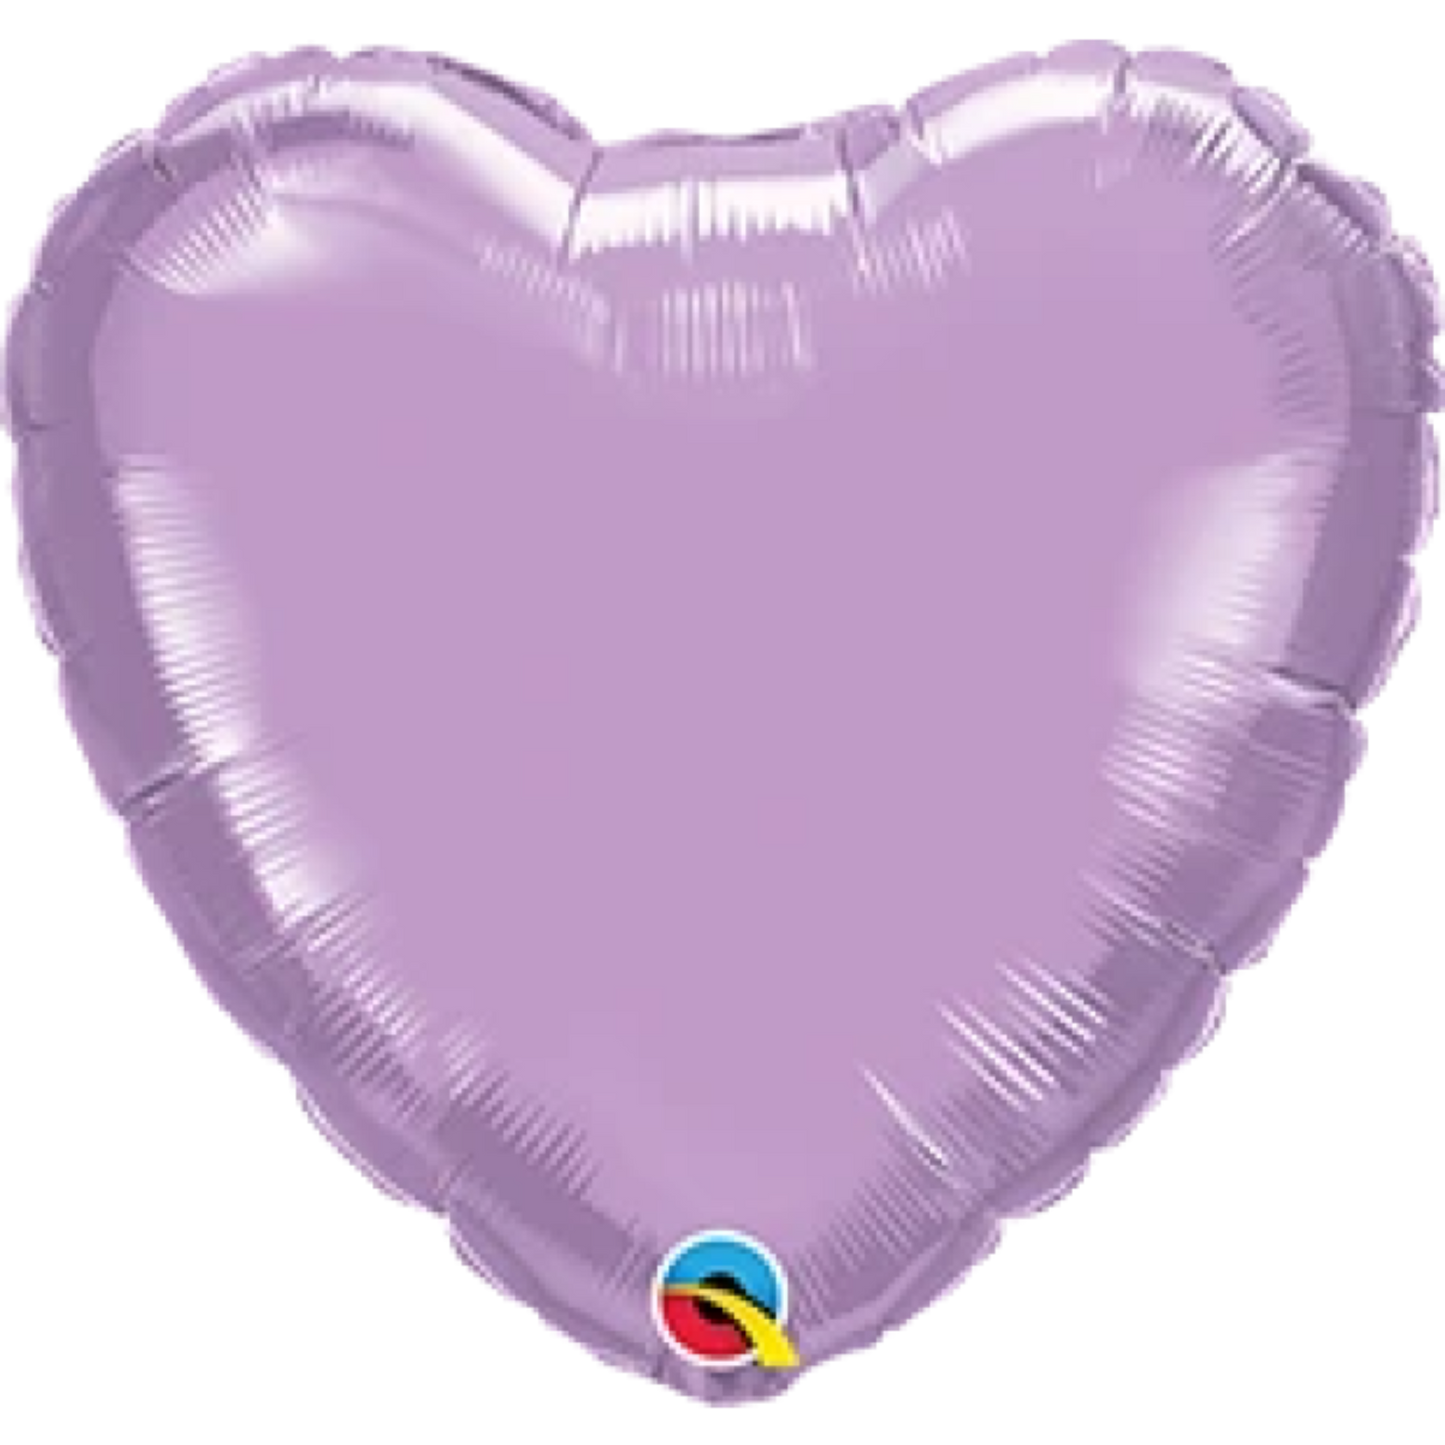 Pearl Lavender Heart